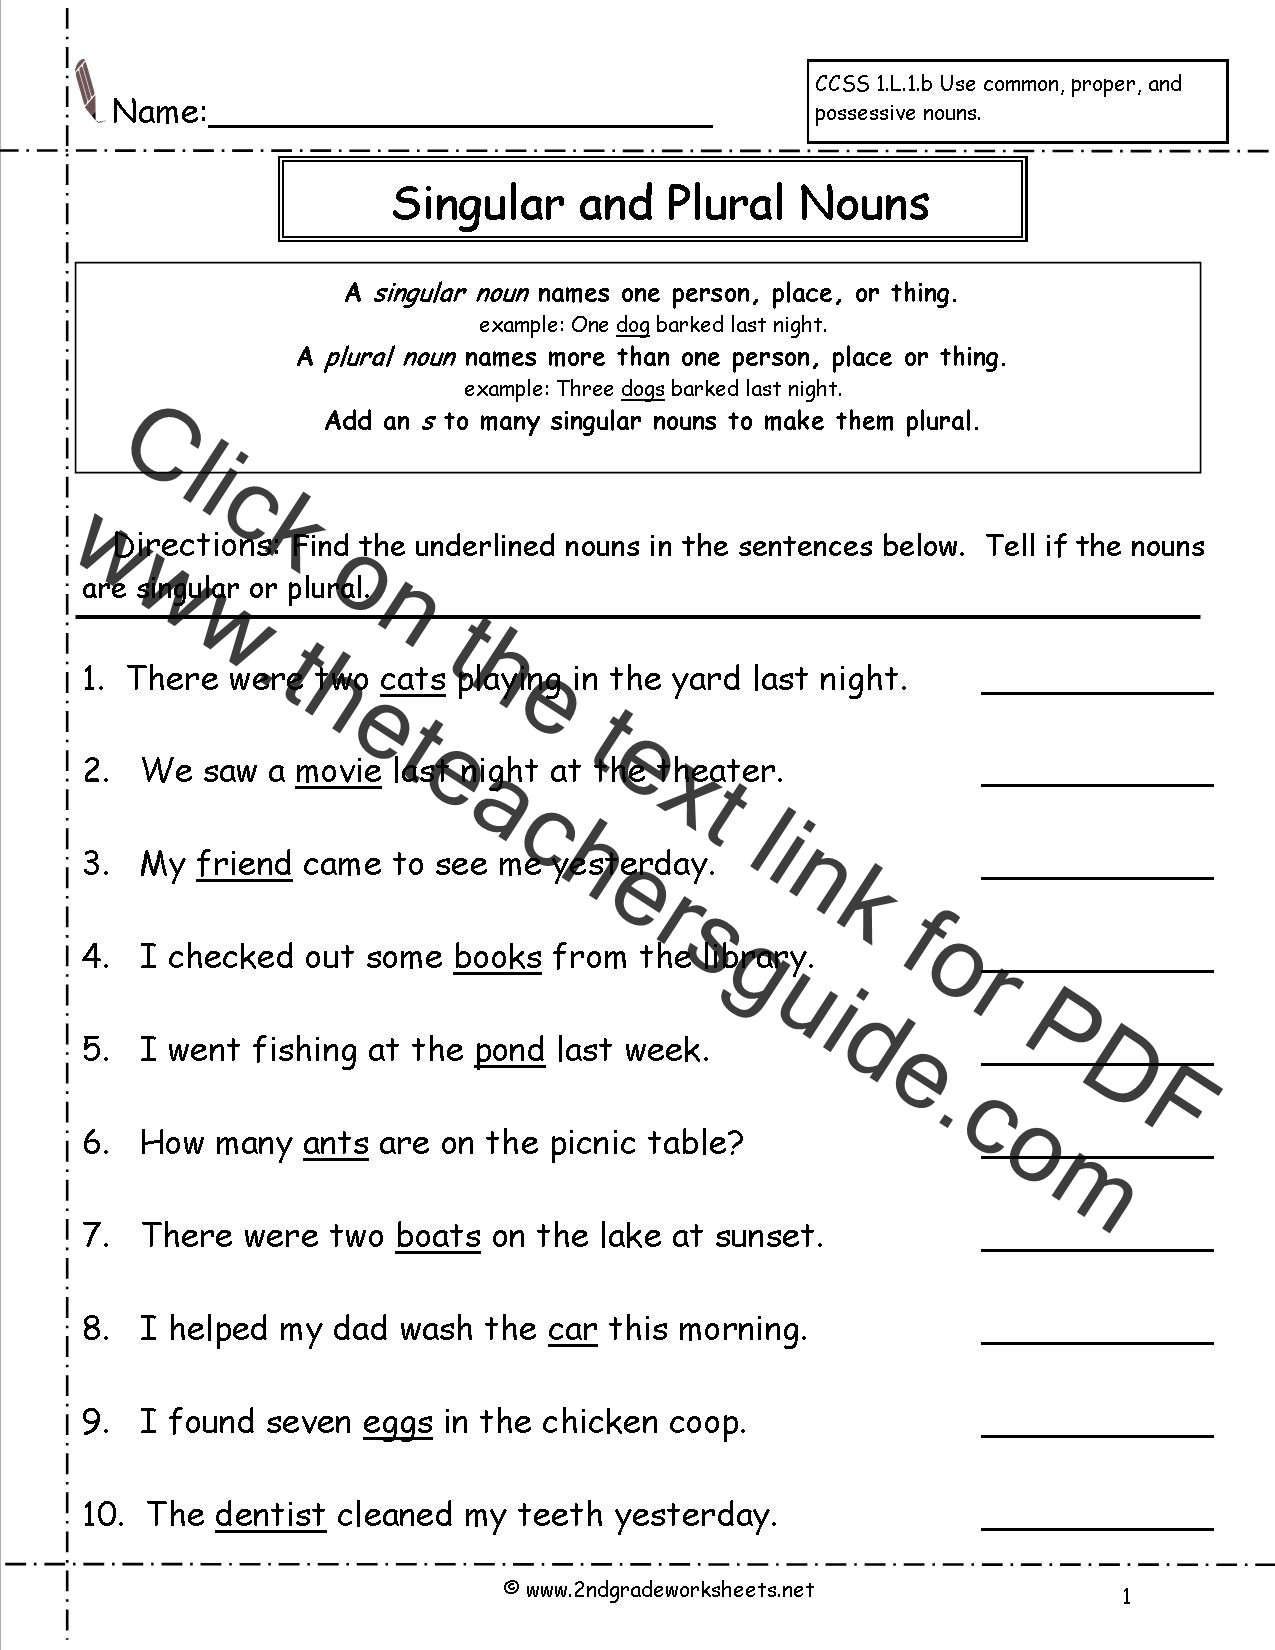 Singular and Plural Nouns Worksheets Throughout Singular And Plural Nouns Worksheet